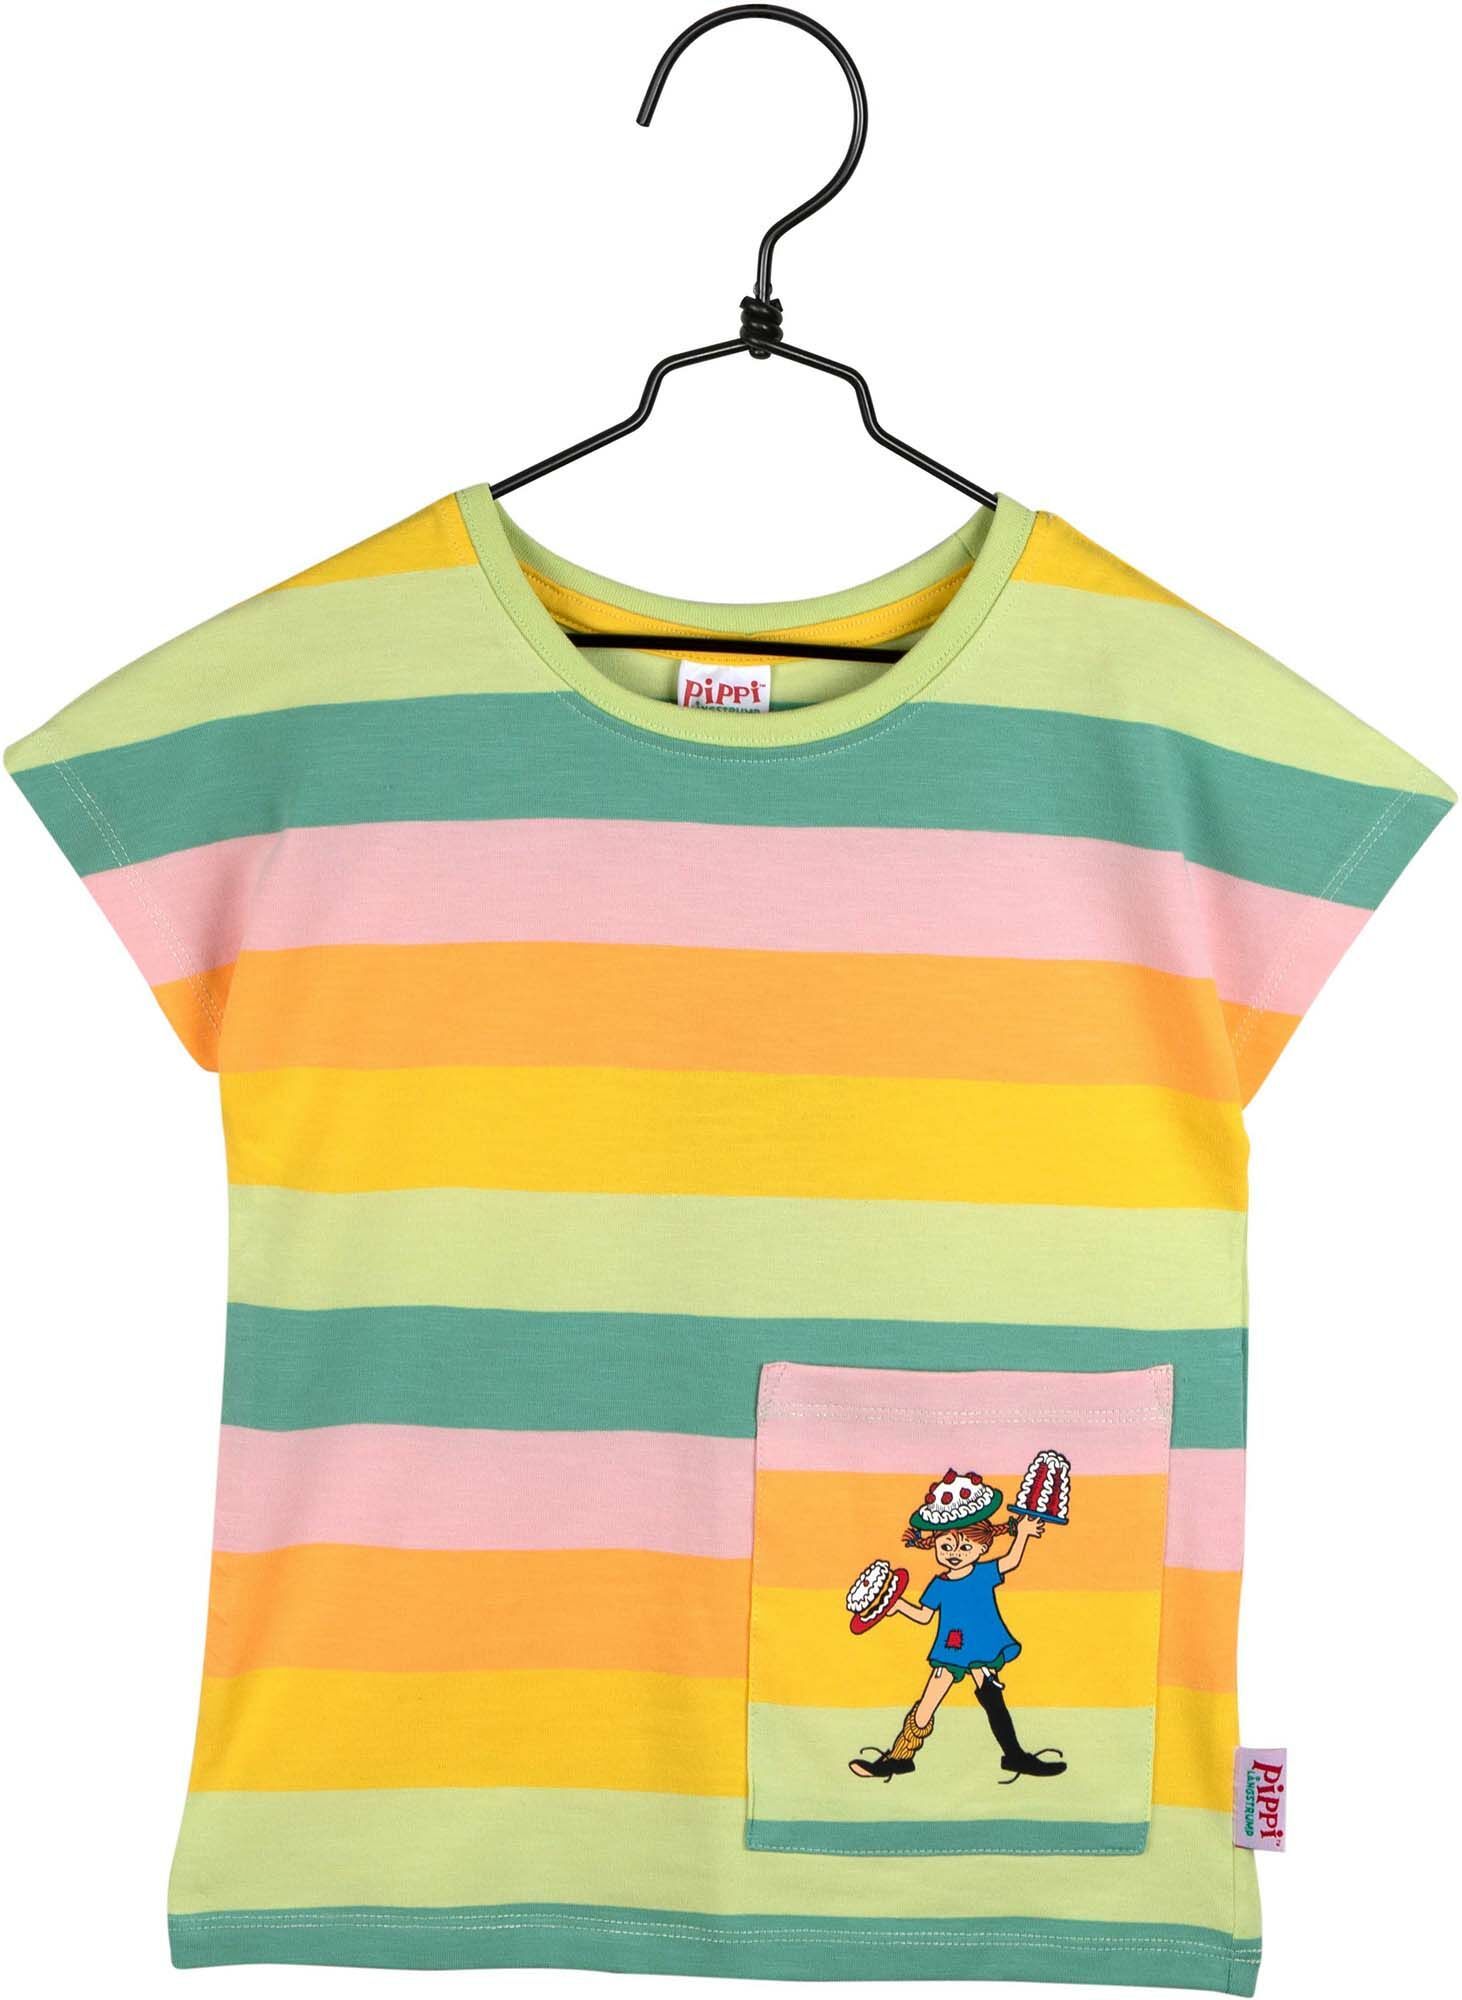 Pippi Långstrump Regnbåge T-Shirt Grön 104